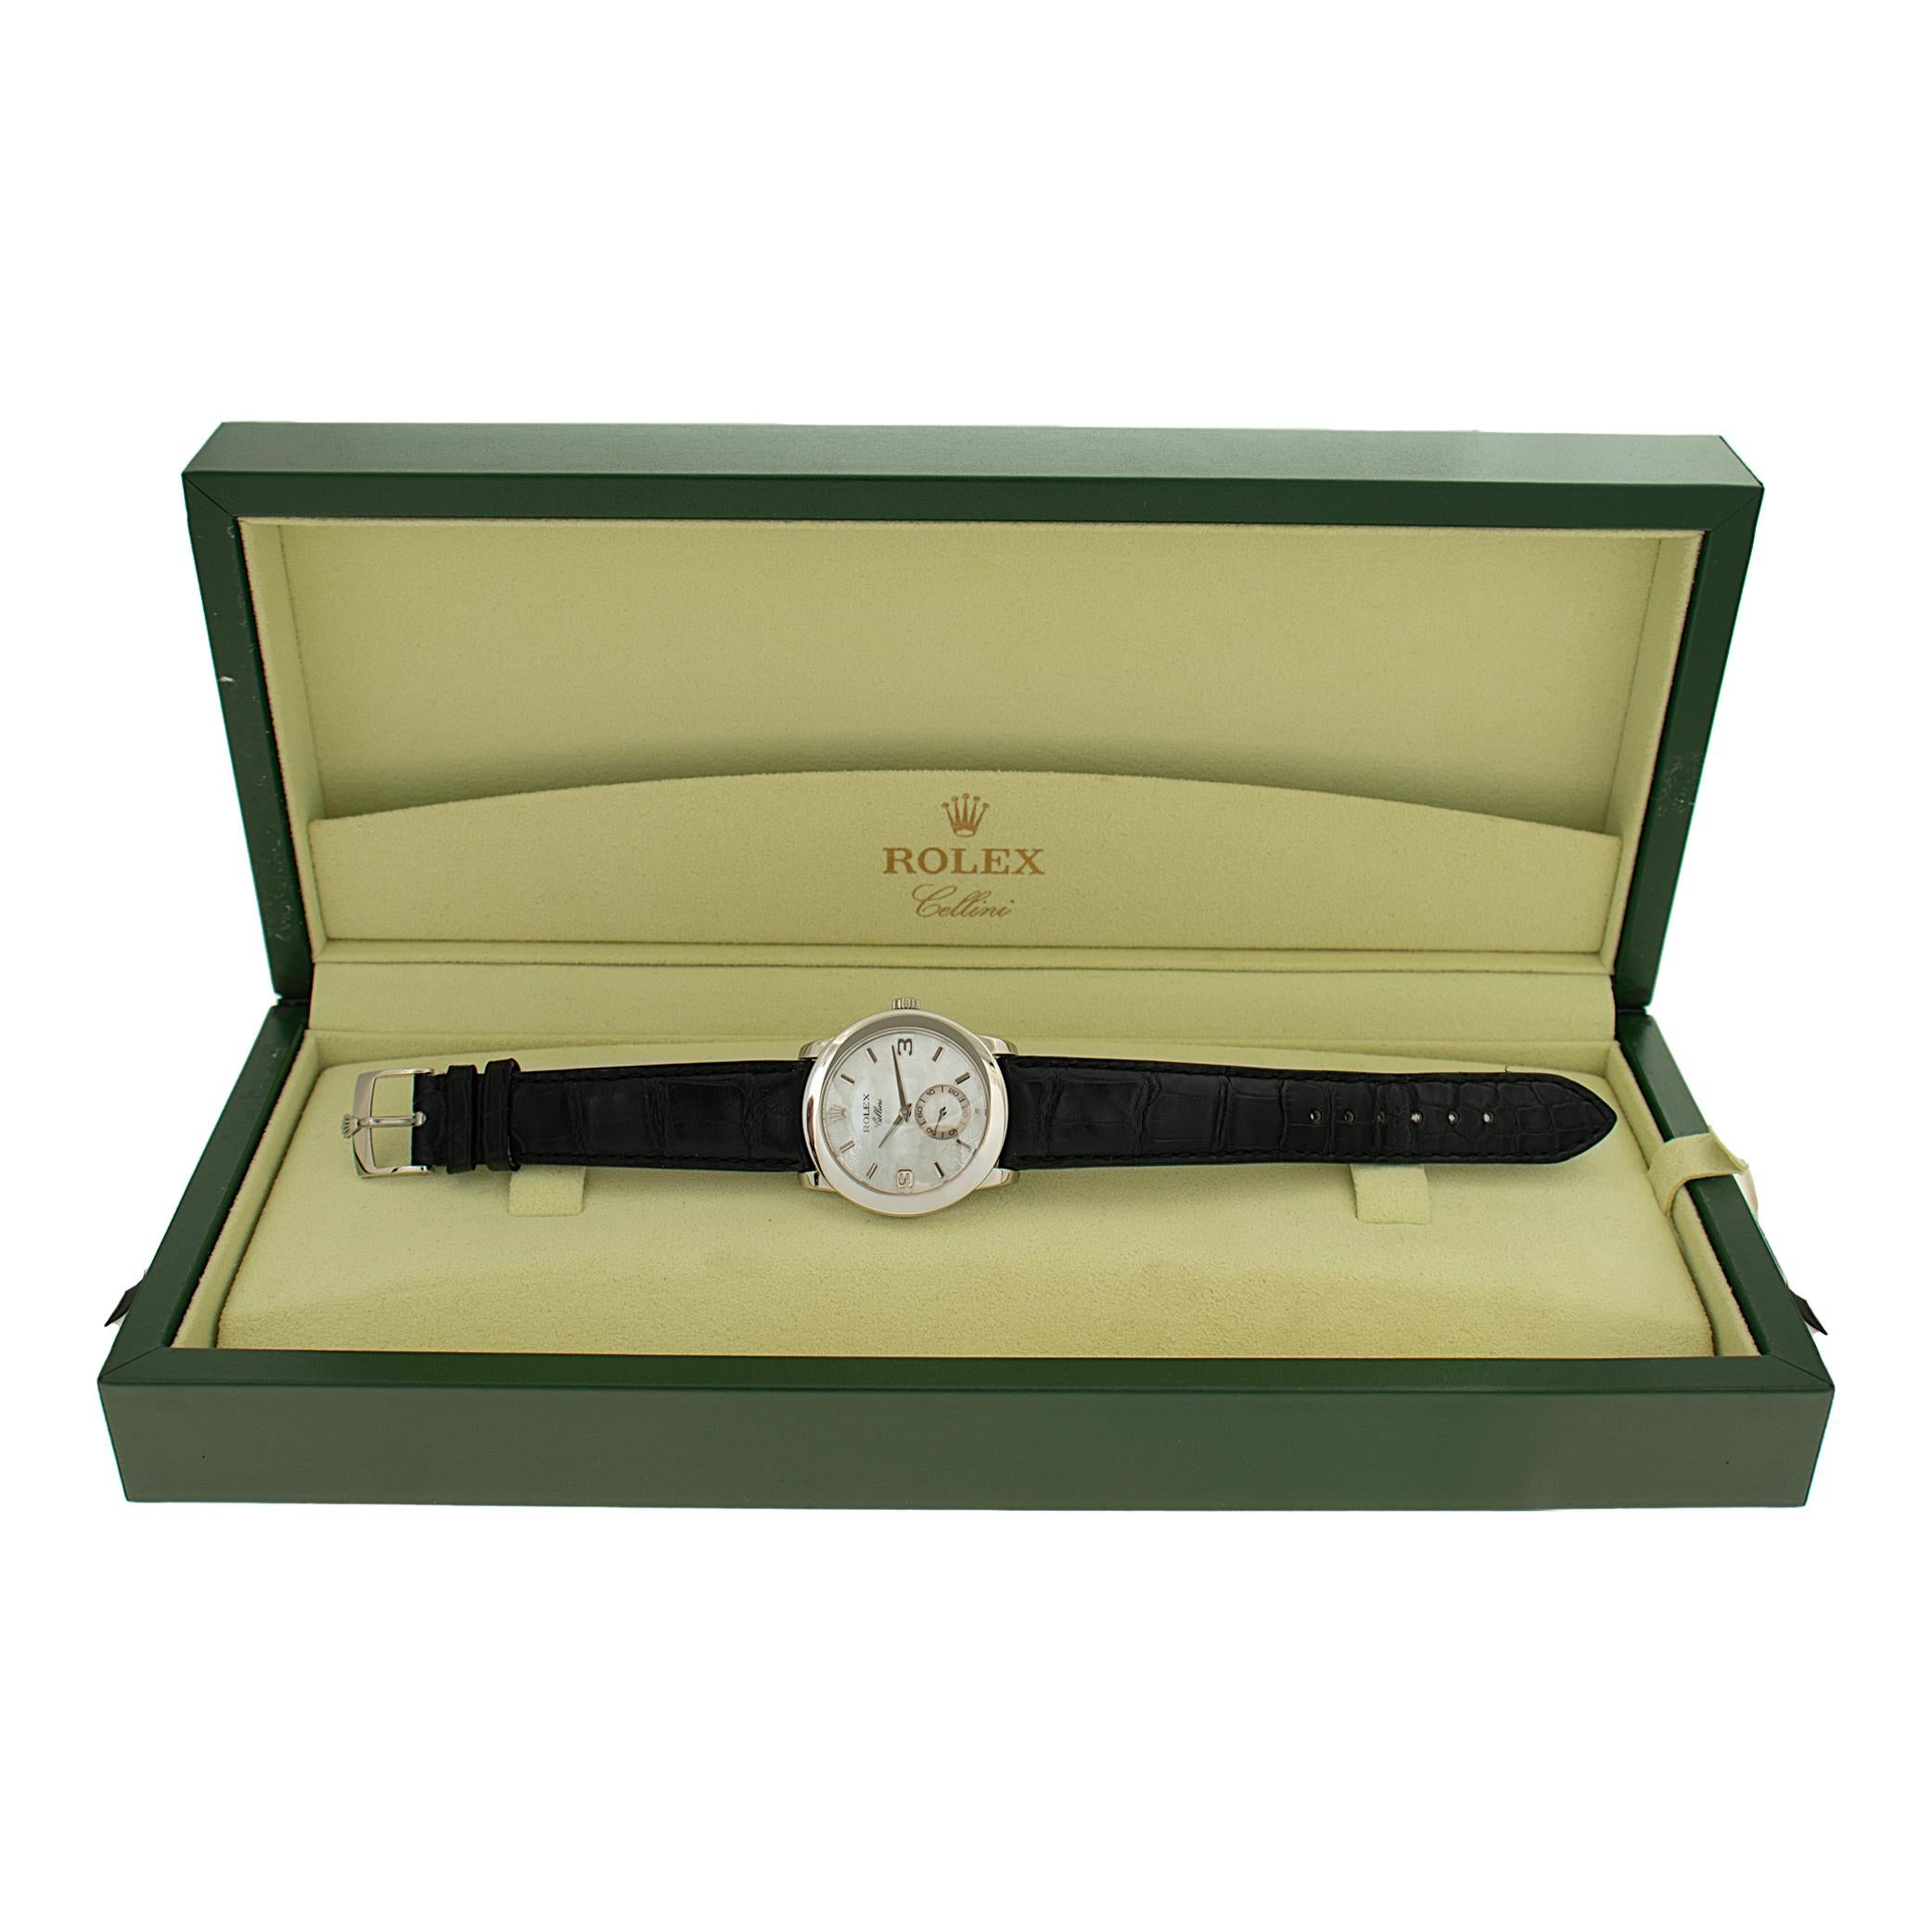 Rolex Cellini platinum Manual Wristwatch Ref 5240 For Sale 2